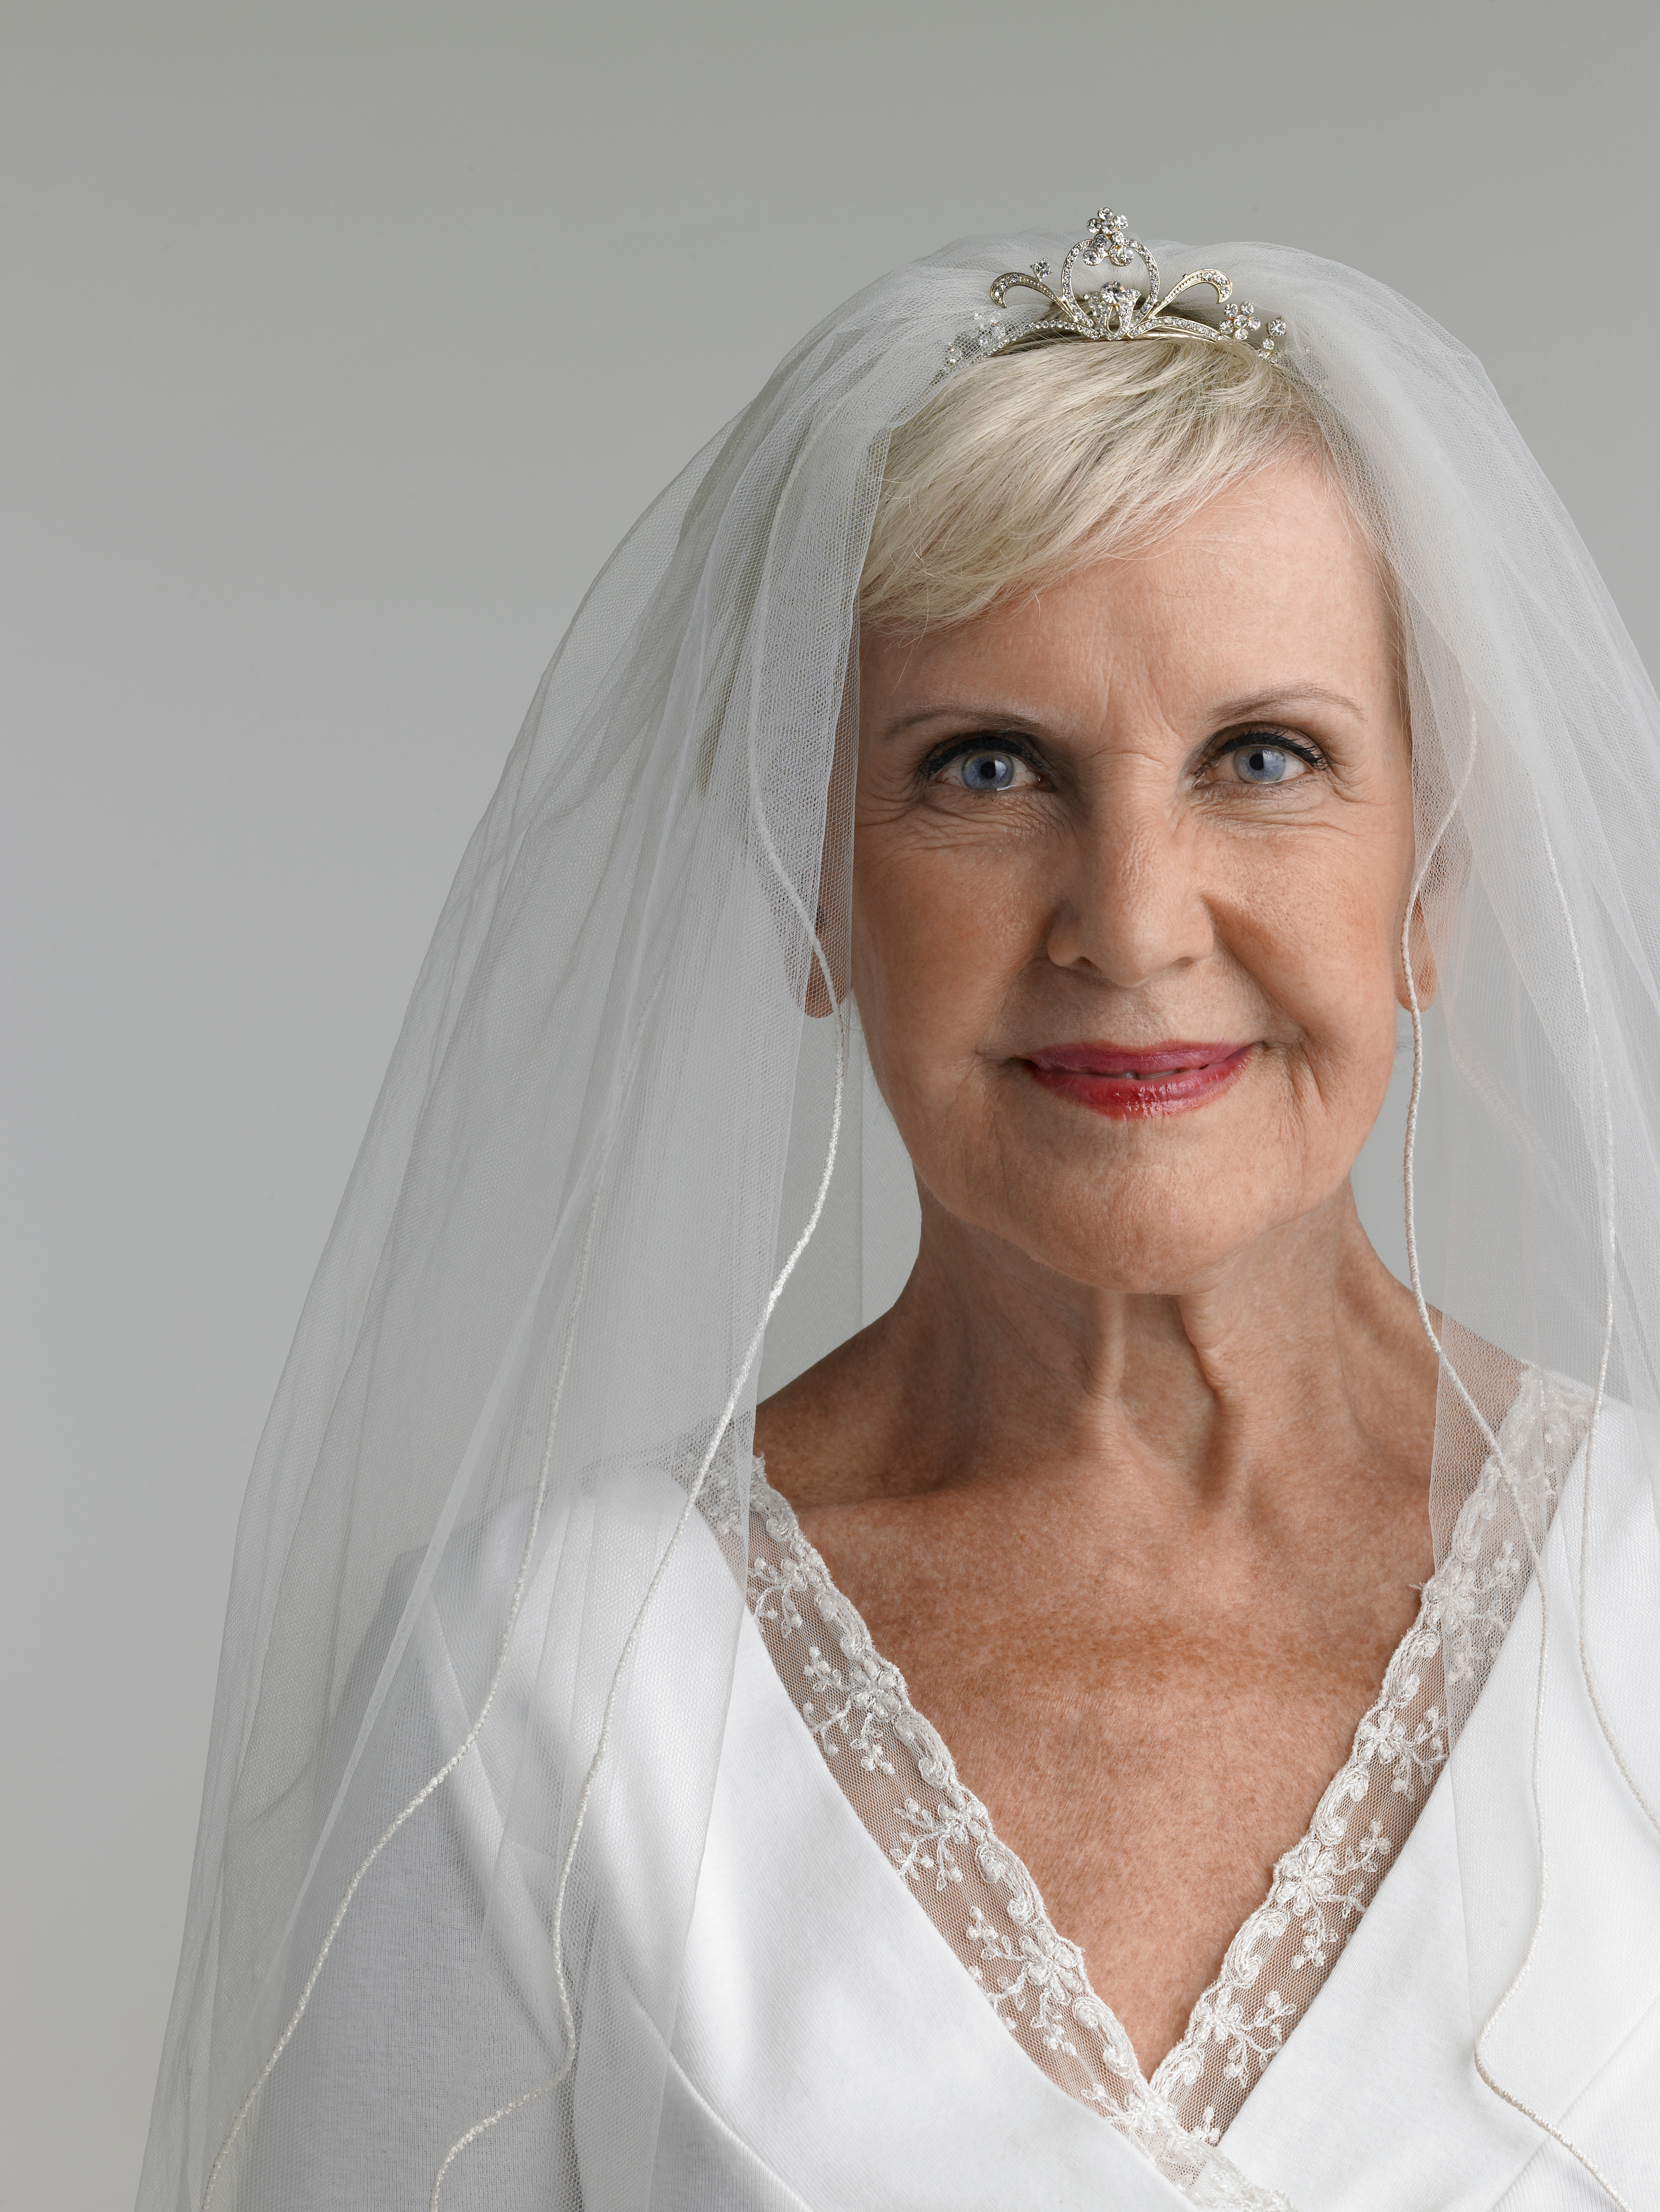 Senior woman wearing wedding dress, portrait | Source: Getty Images